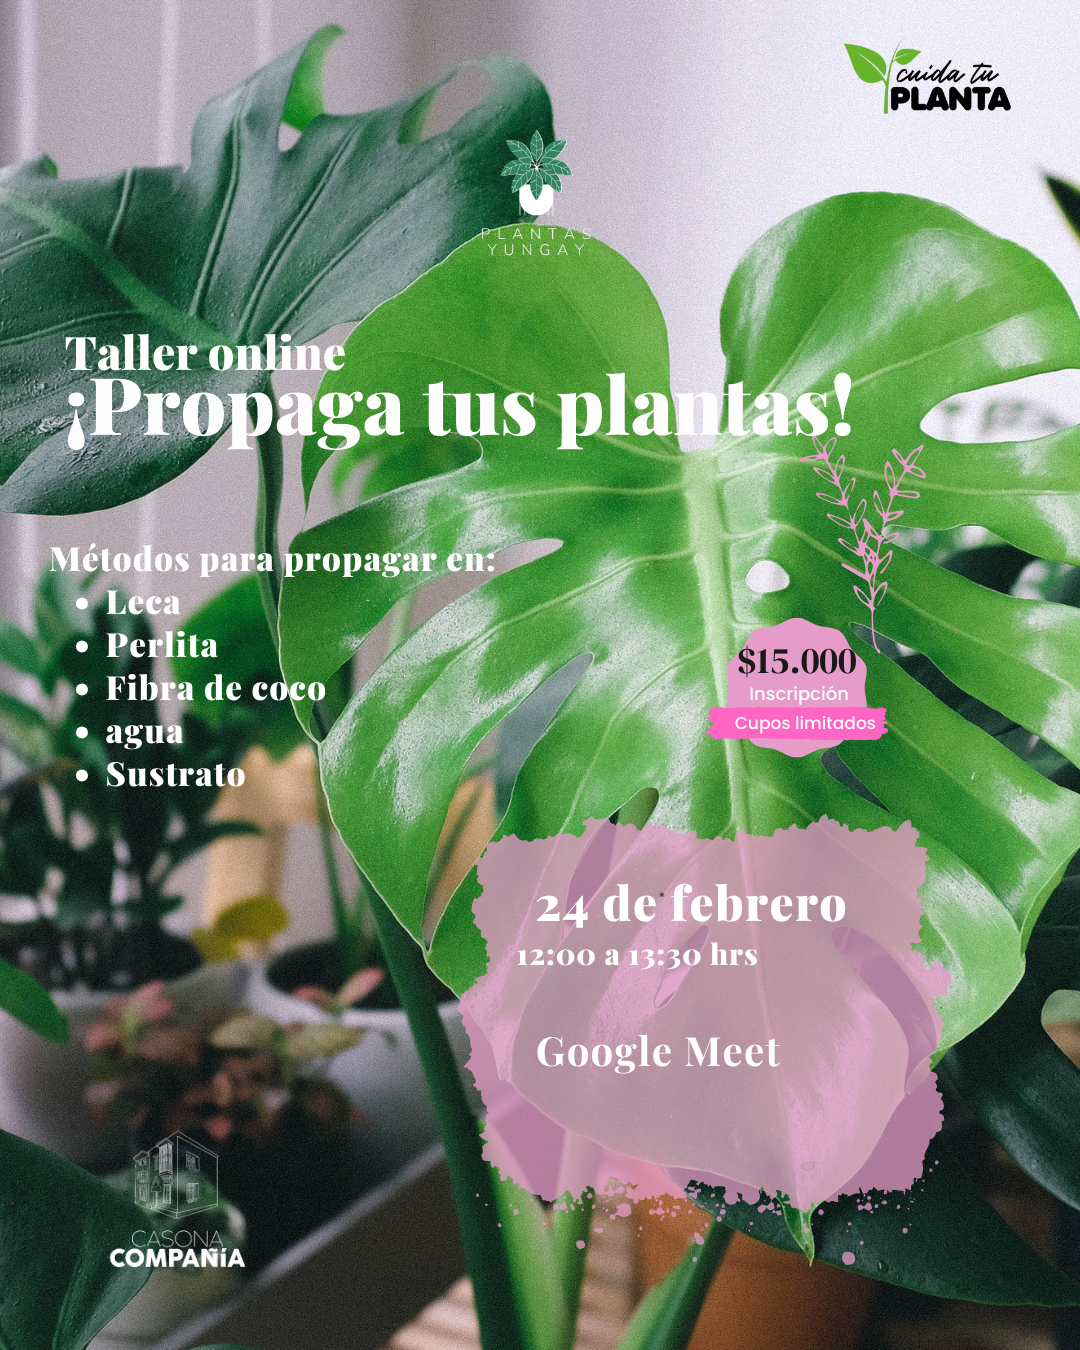 Taller online "Propaga tus plantas" 24 de febrero